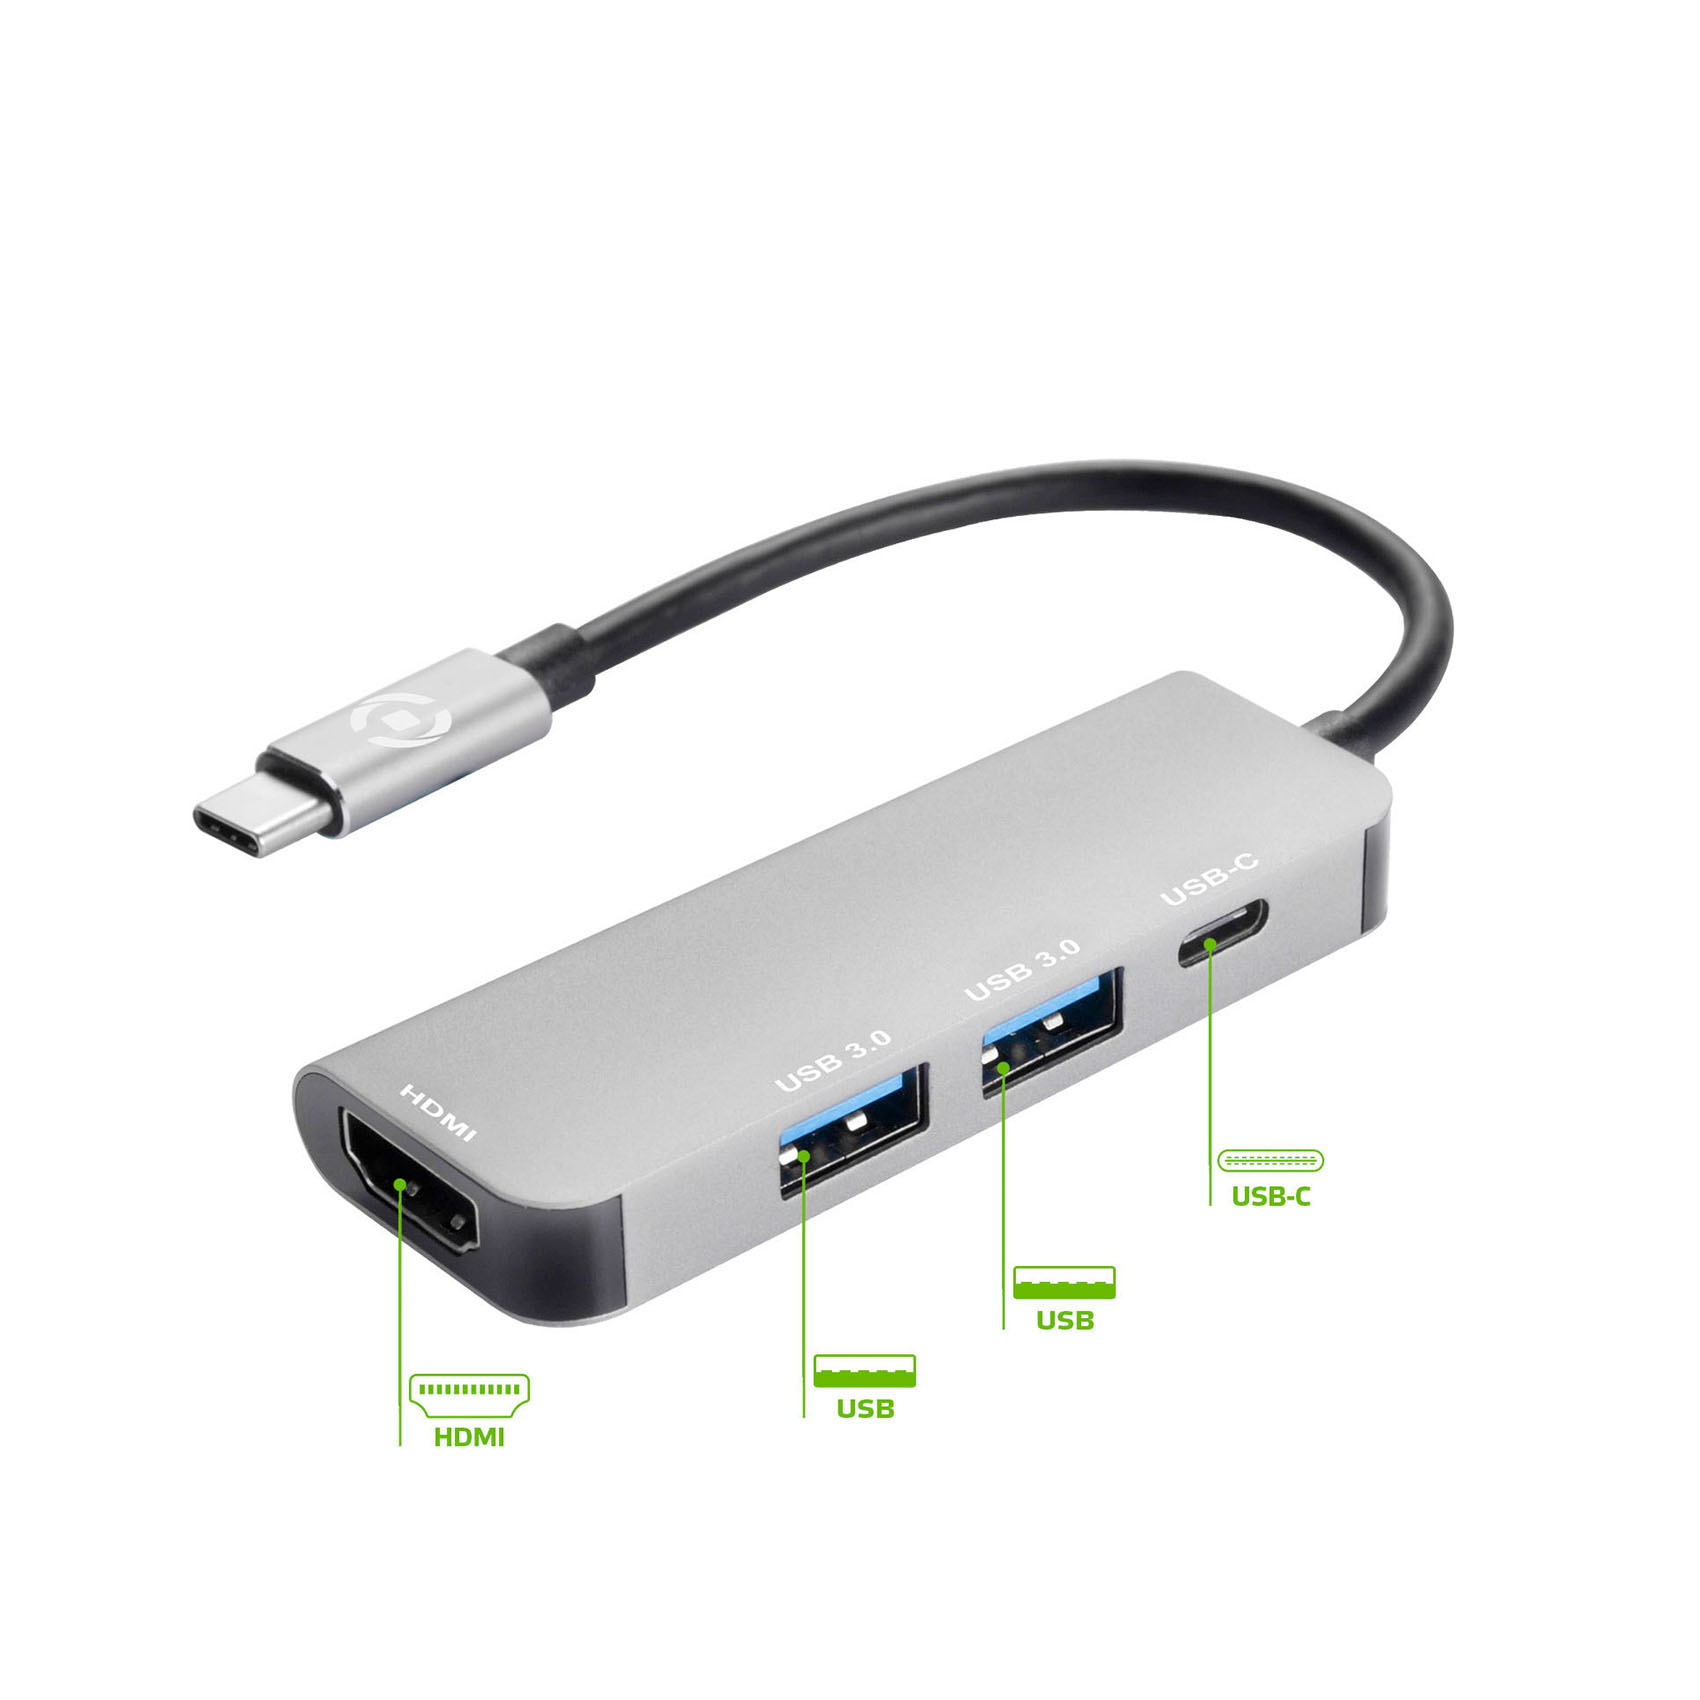 Adattatore multiporta USB-C ProHubPlus, Celly, , large